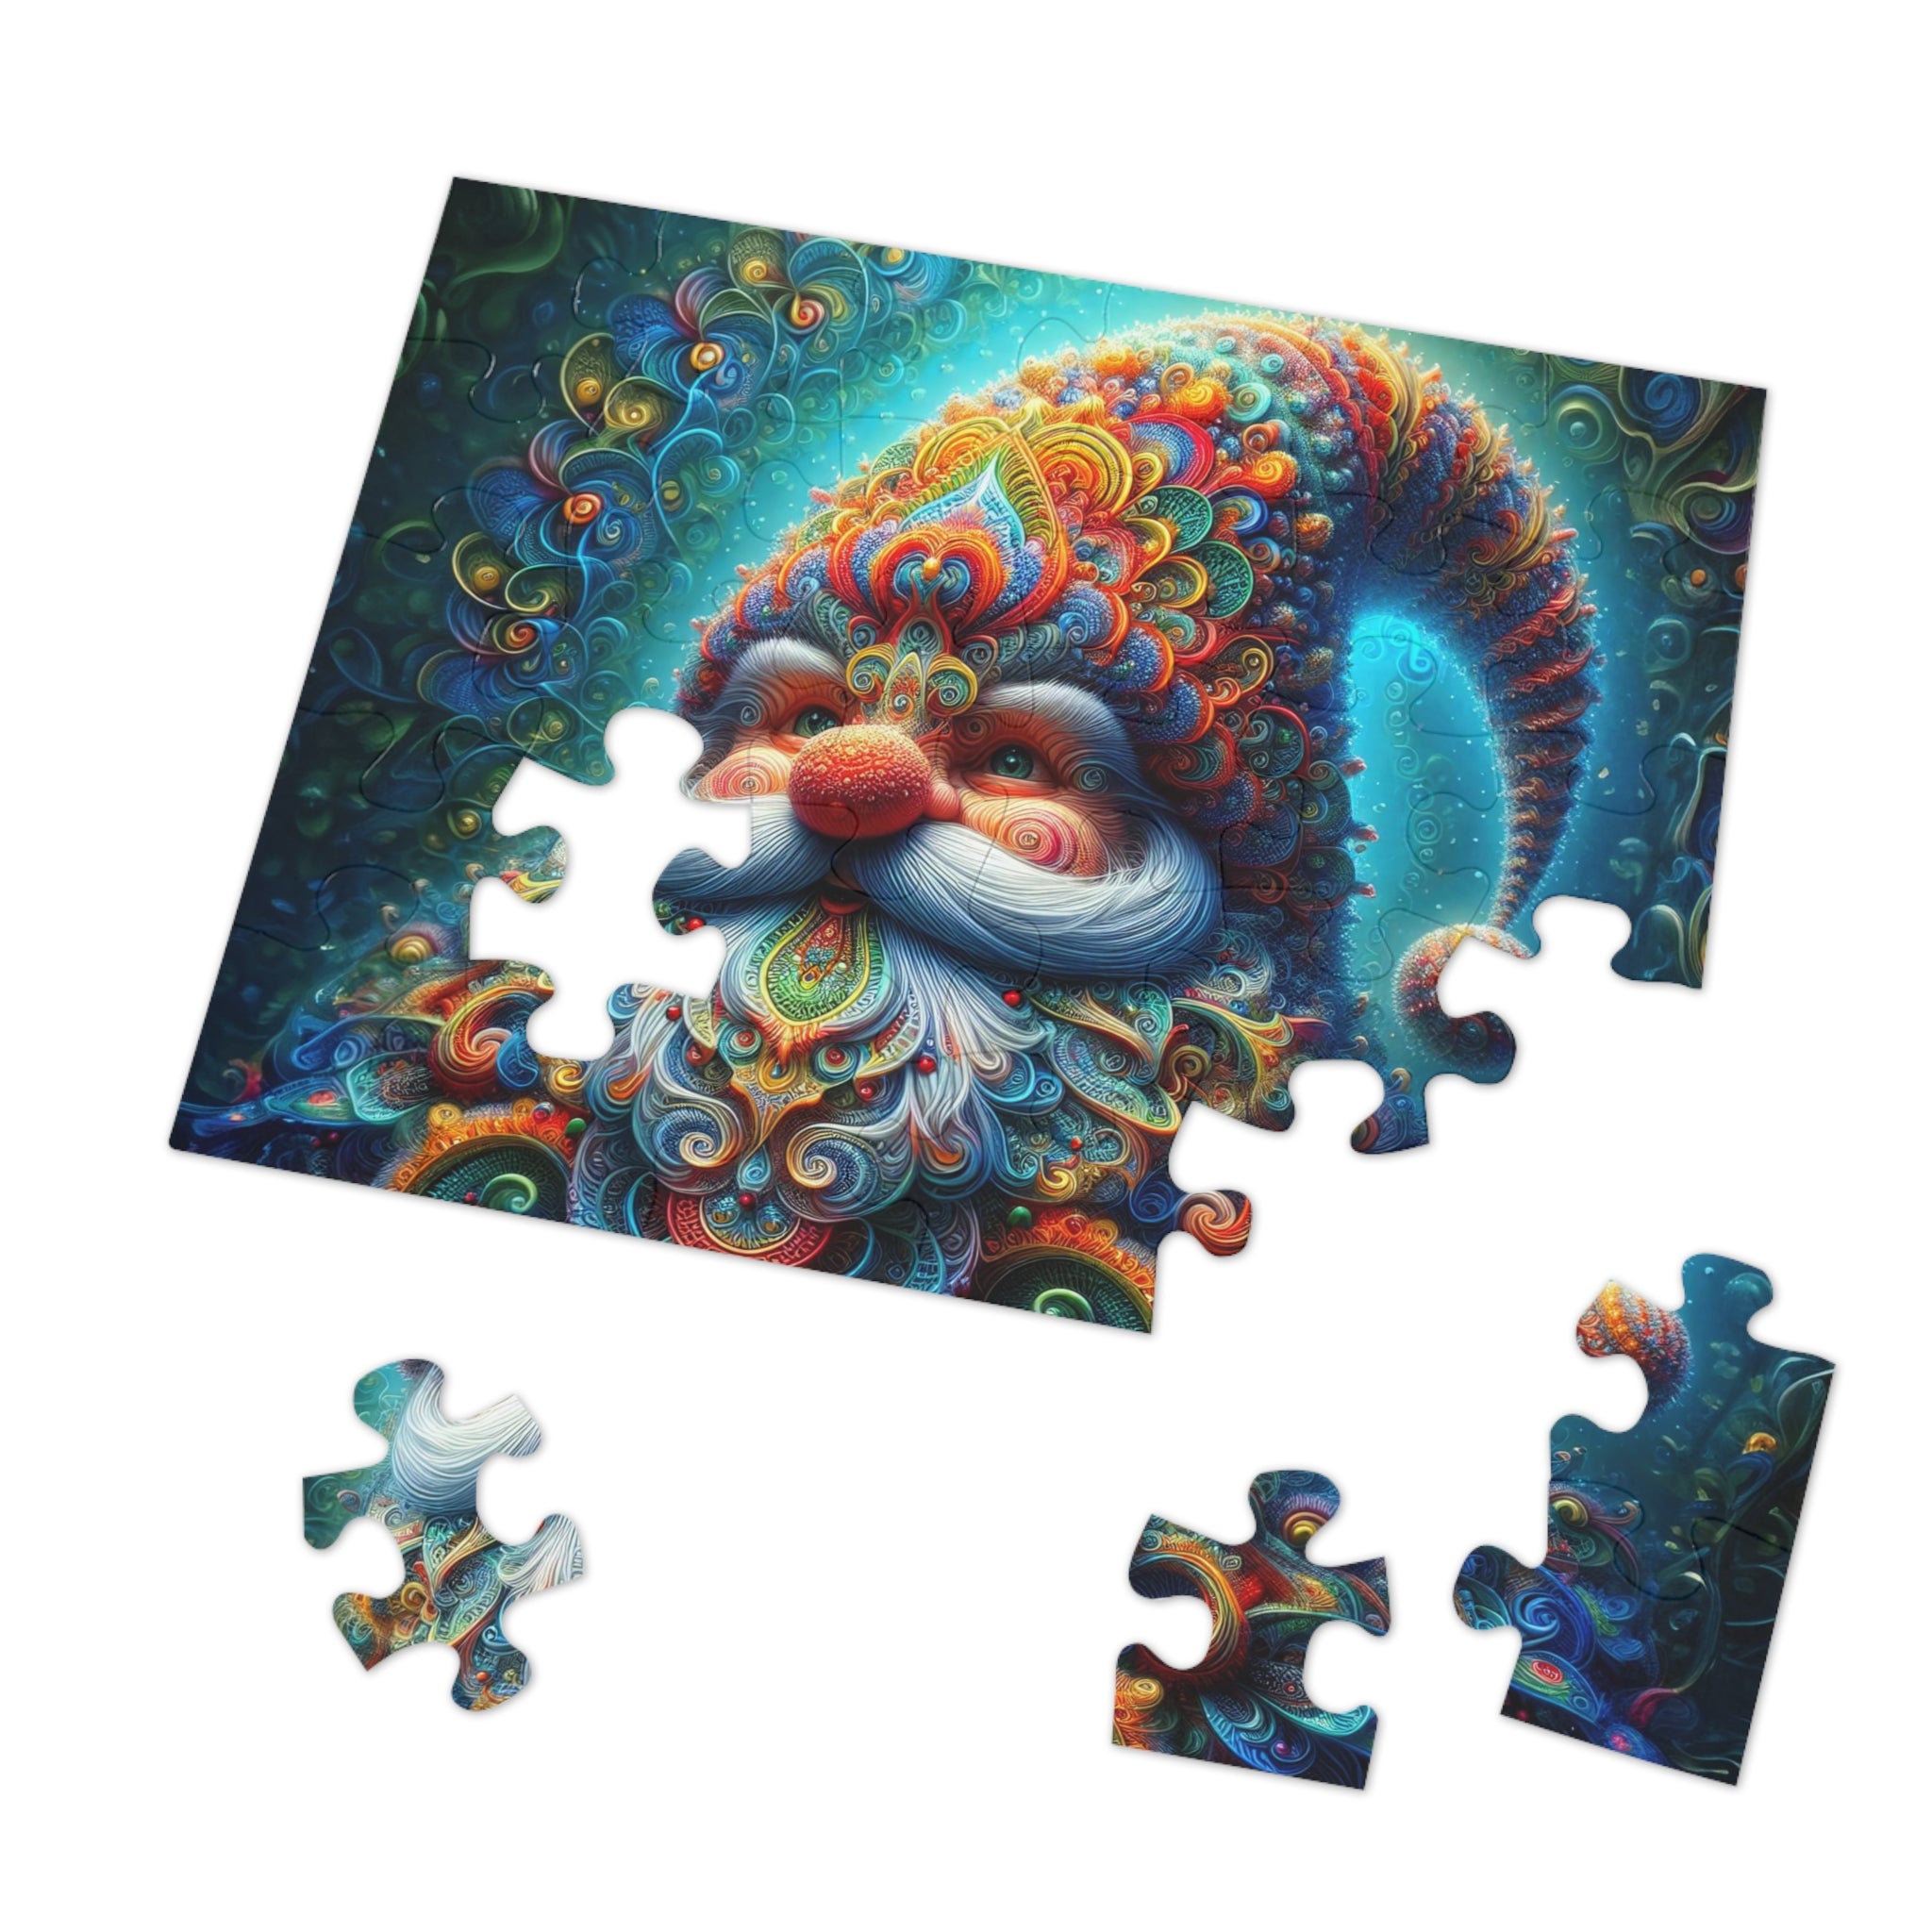 The Yuletide Dreamweaver Jigsaw Puzzle